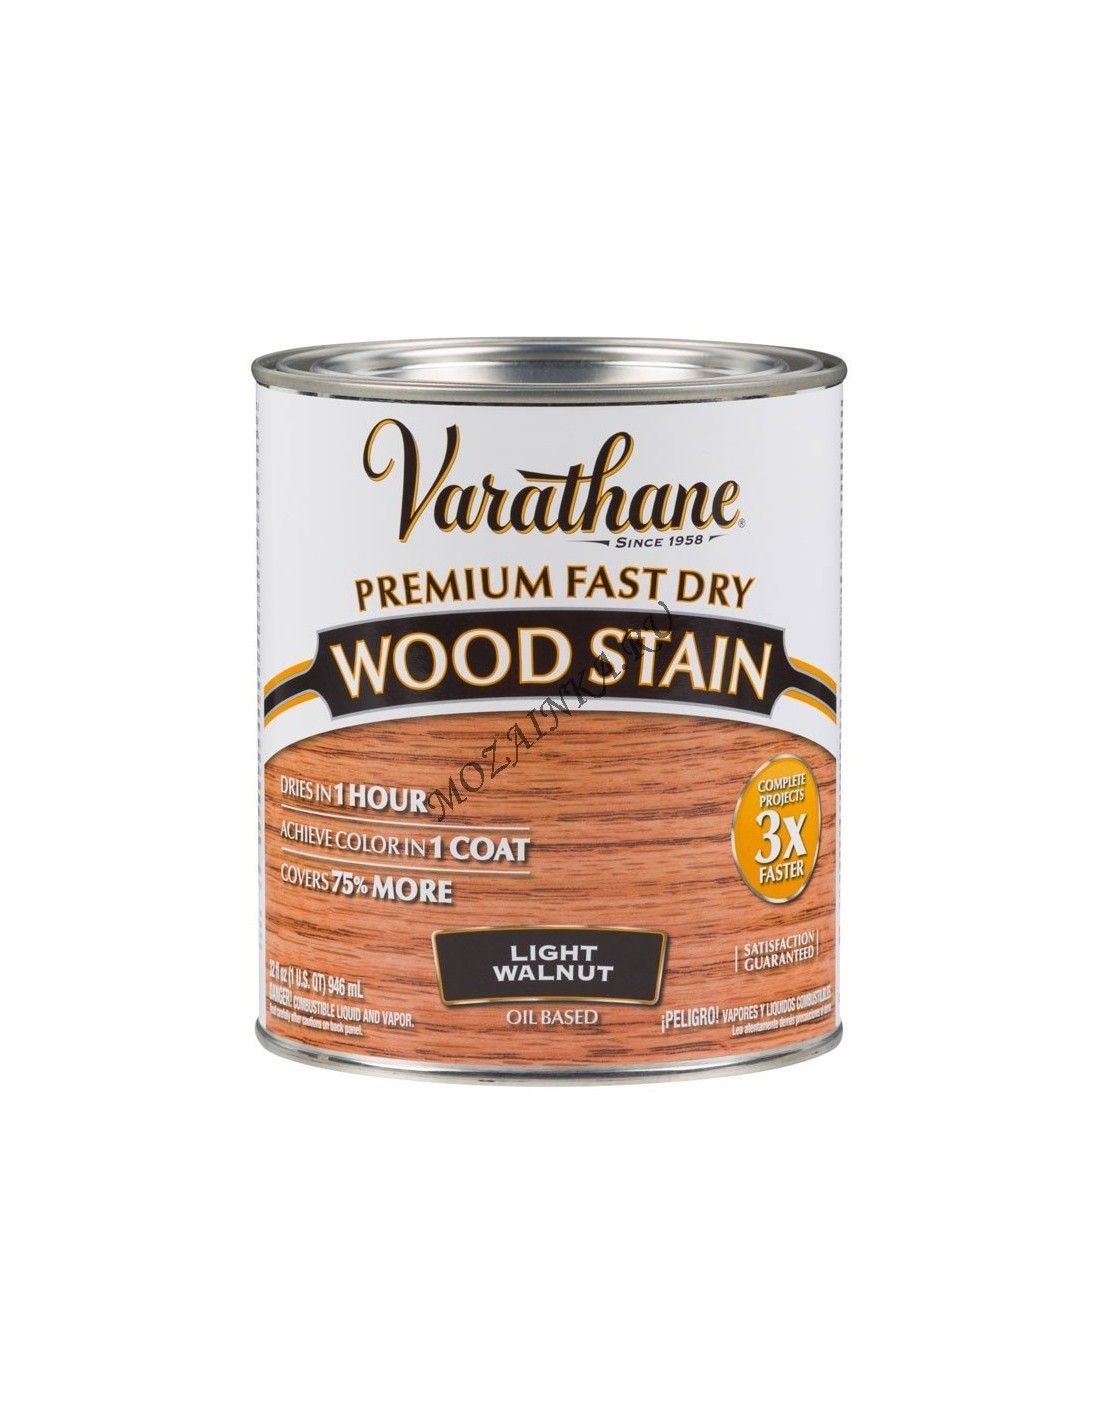 Varathane fast dry wood stain